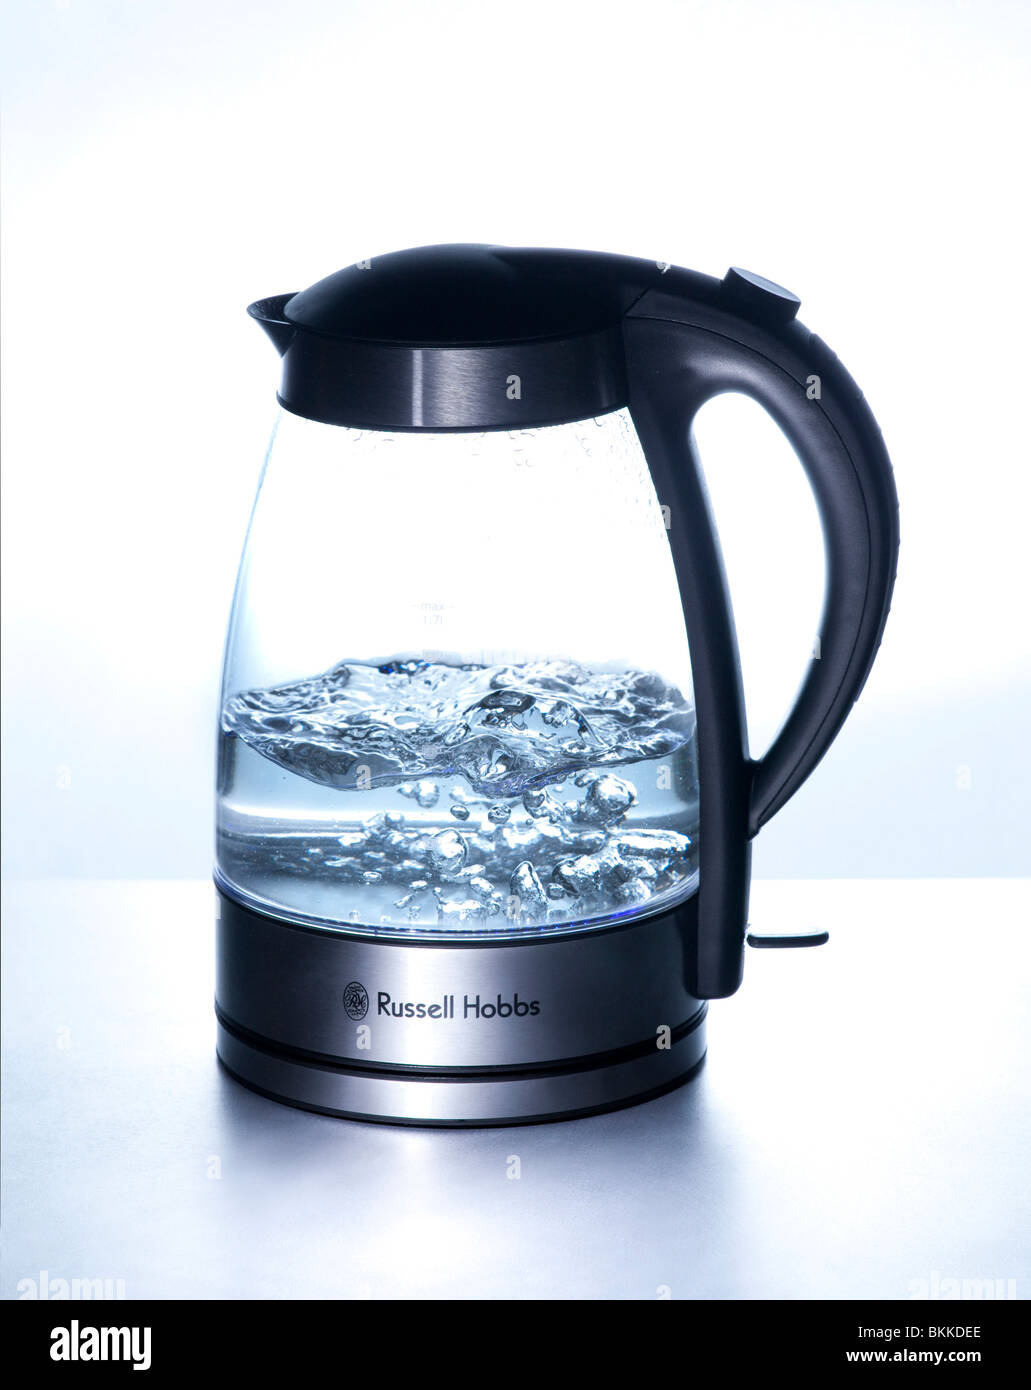 Russell Hobbs modern electric kettle boiling water using Schott Duran  heatproof borosilicate glass Stock Photo - Alamy